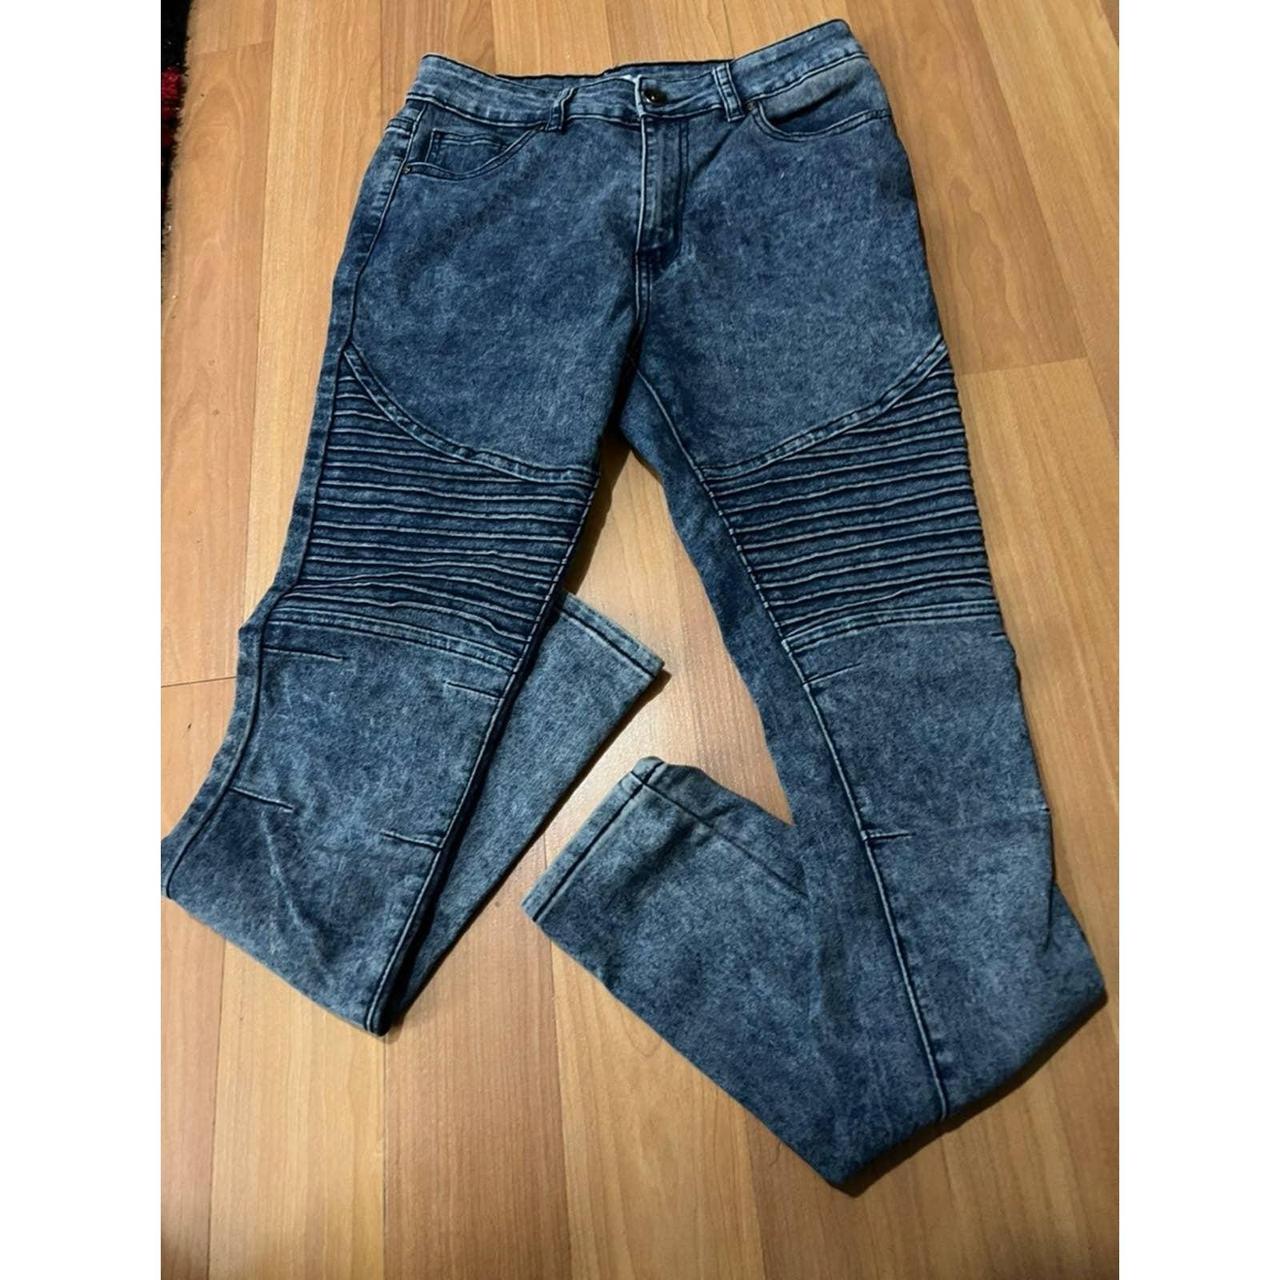 Product Image 2 - AQ Denim Women Jeans Size